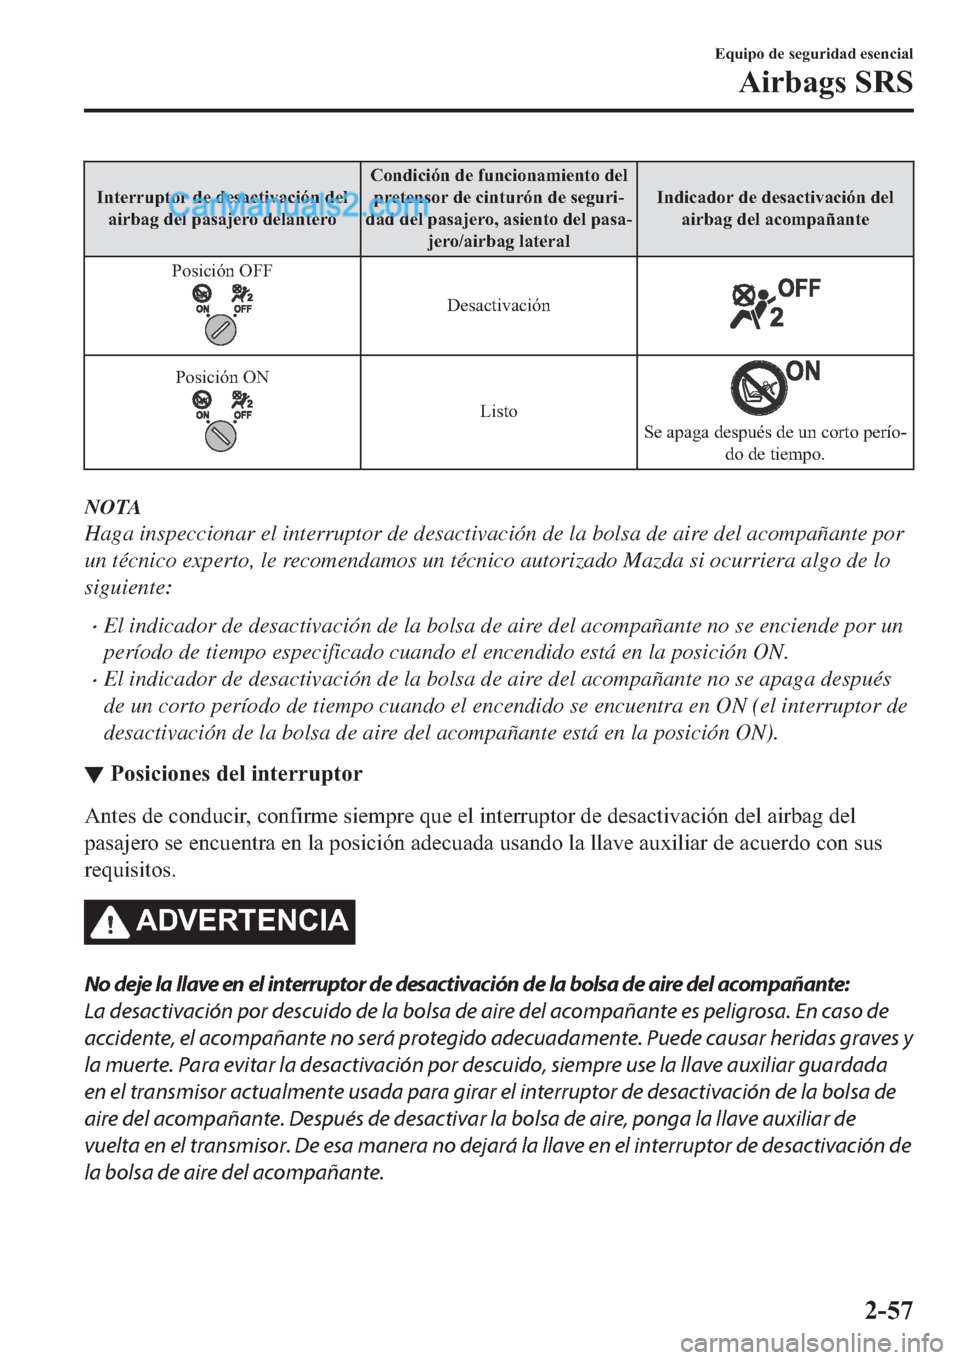 MAZDA MODEL 2 2019  Manual del propietario (in Spanish) �,�Q�W�H�U�U�X�S�W�R�U��G�H��G�H�V�D�F�W�L�Y�D�F�L�y�Q��G�H�O
�D�L�U�E�D�J��G�H�O��S�D�V�D�M�H�U�R��G�H�O�D�Q�W�H�U�R�&�R�Q�G�L�F�L�y�Q��G�H��I�X�Q�F�L�R�Q�D�P�L�H�Q�W�R��G�H�O
�S�U�H�W�H�Q�V